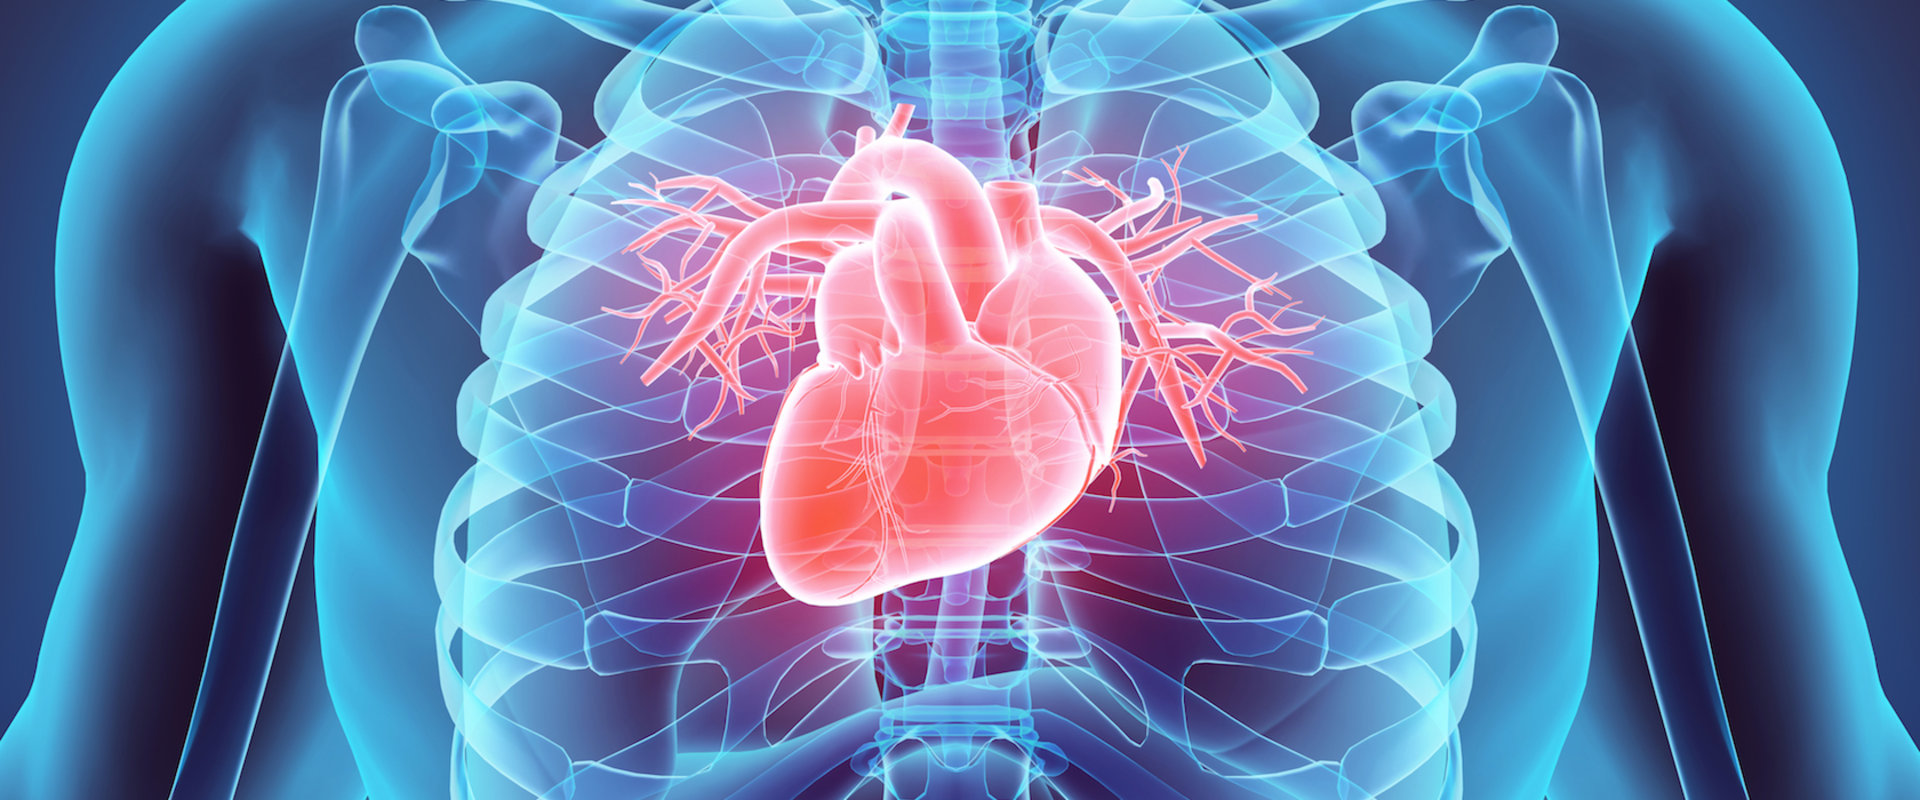 Can Methamphetamine Cause Cardiomyopathy?